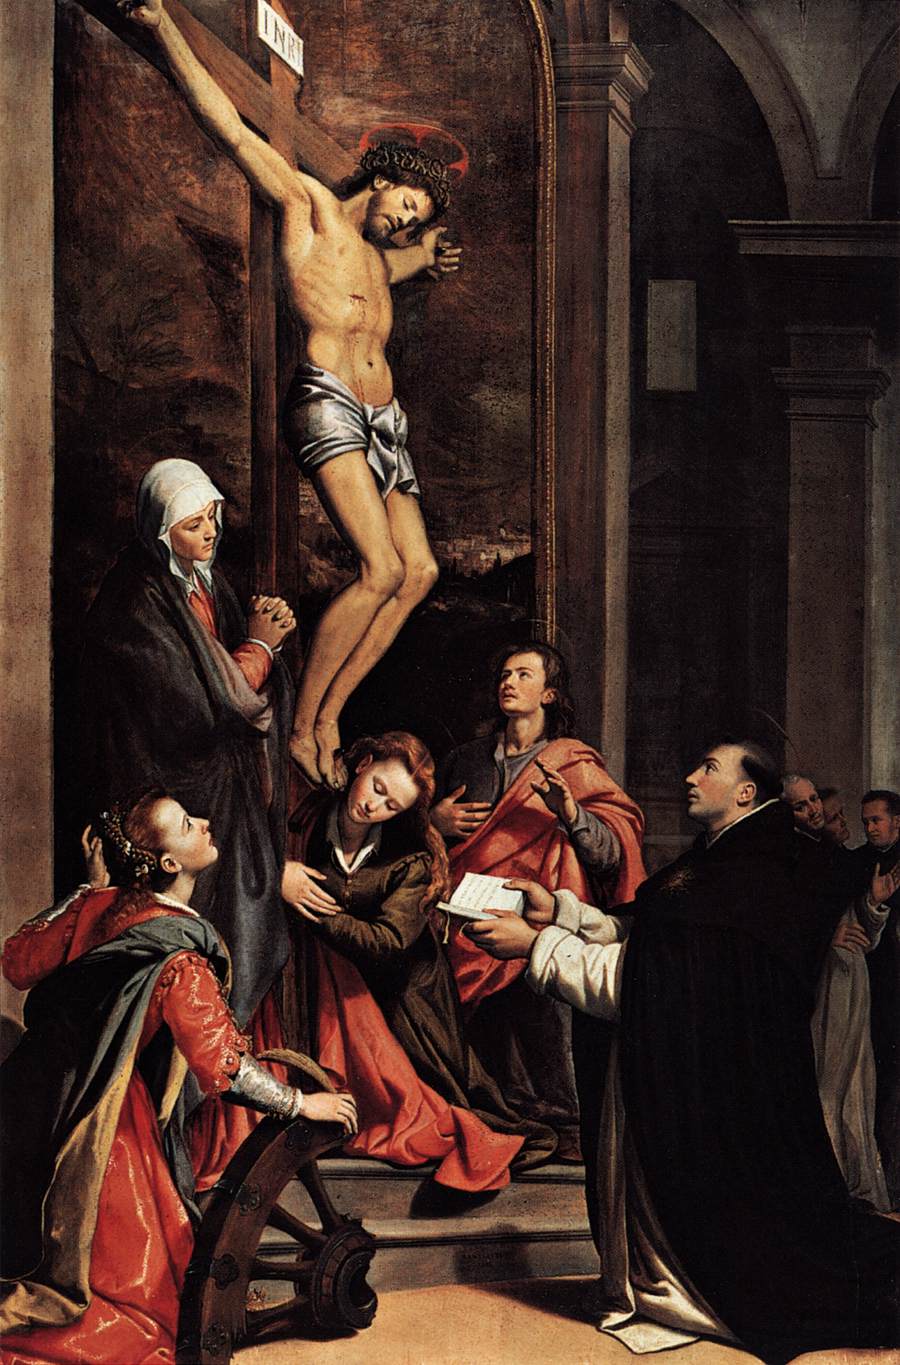 Santi di Tito: Thomas vor Jesus Christus, 1593, in der Kirche San Marco in Florenz